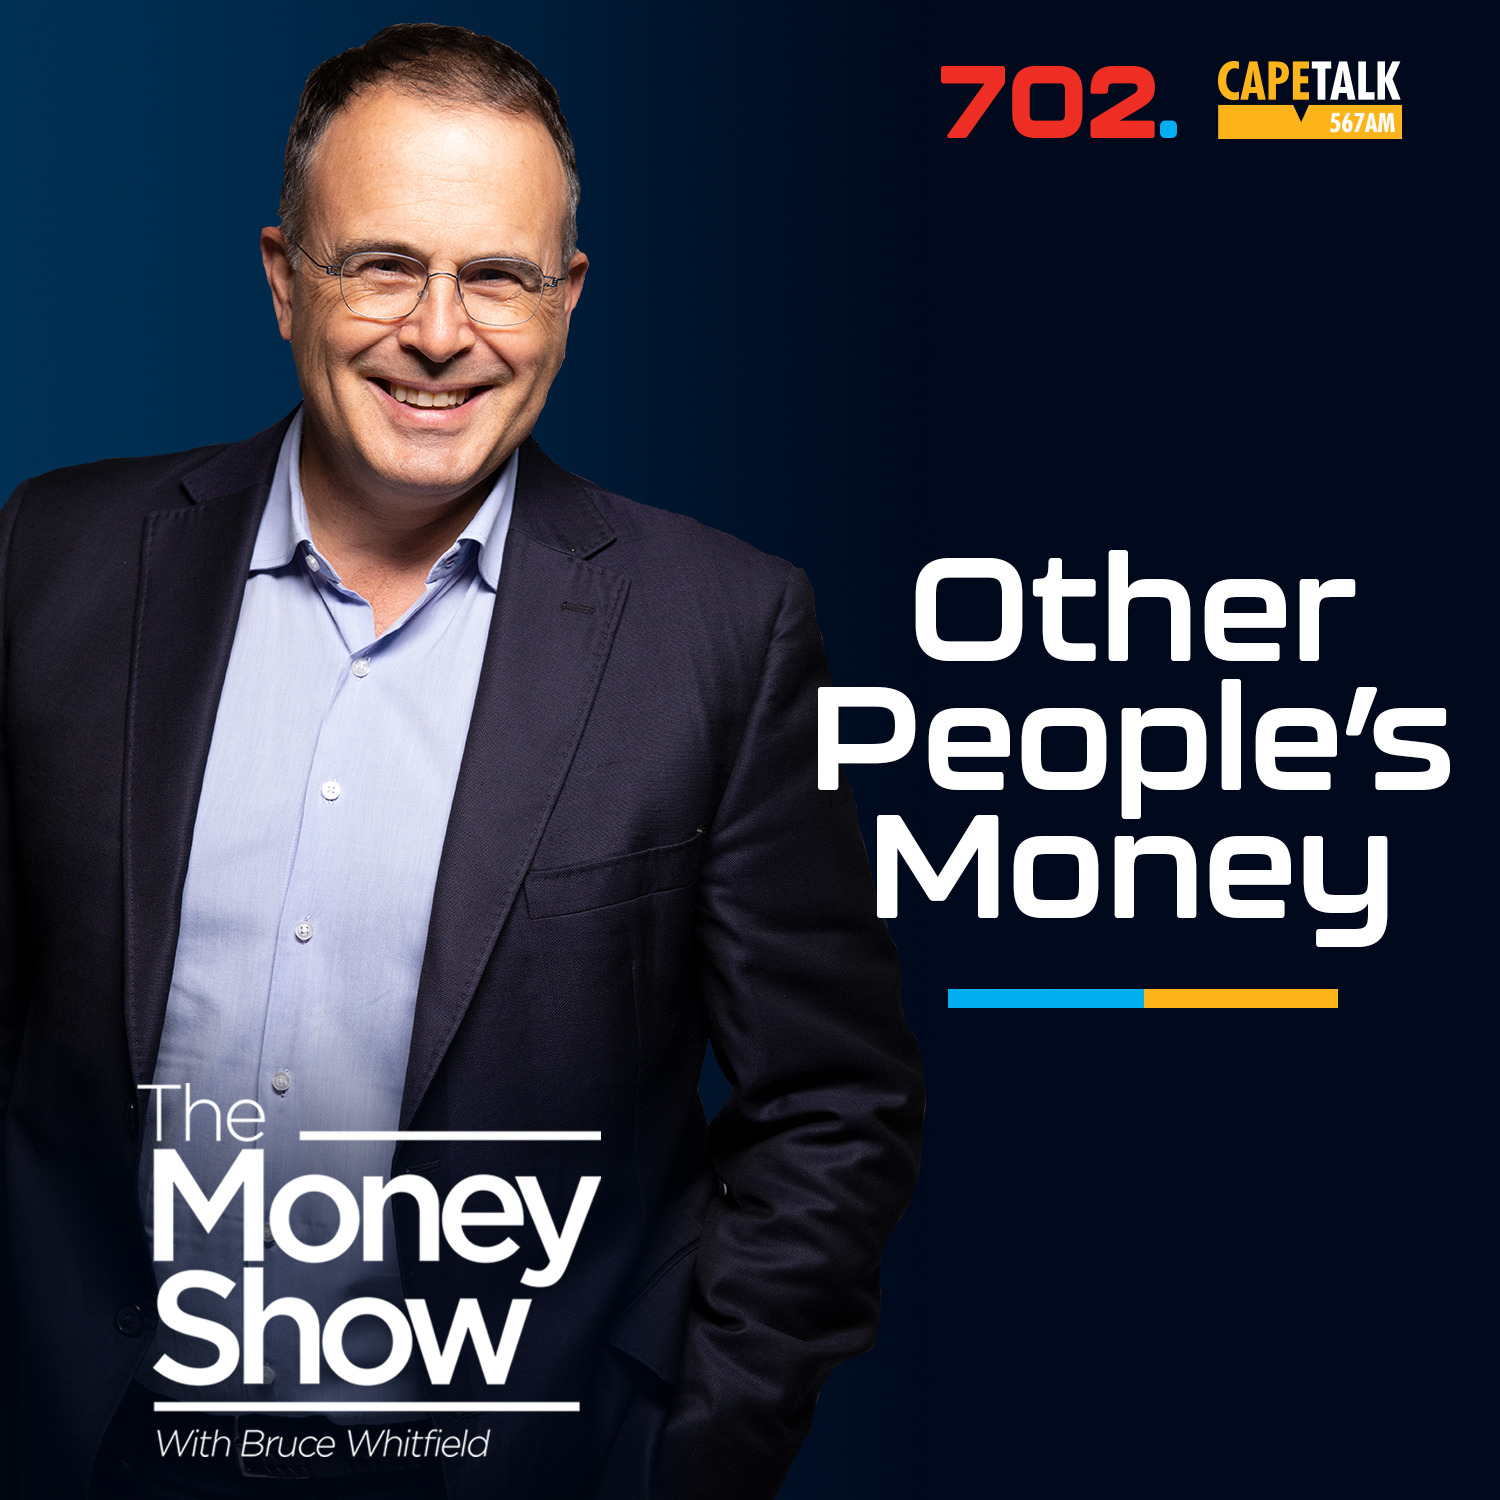 Other People’s Money - Melanie Bala, Broadcasting personality